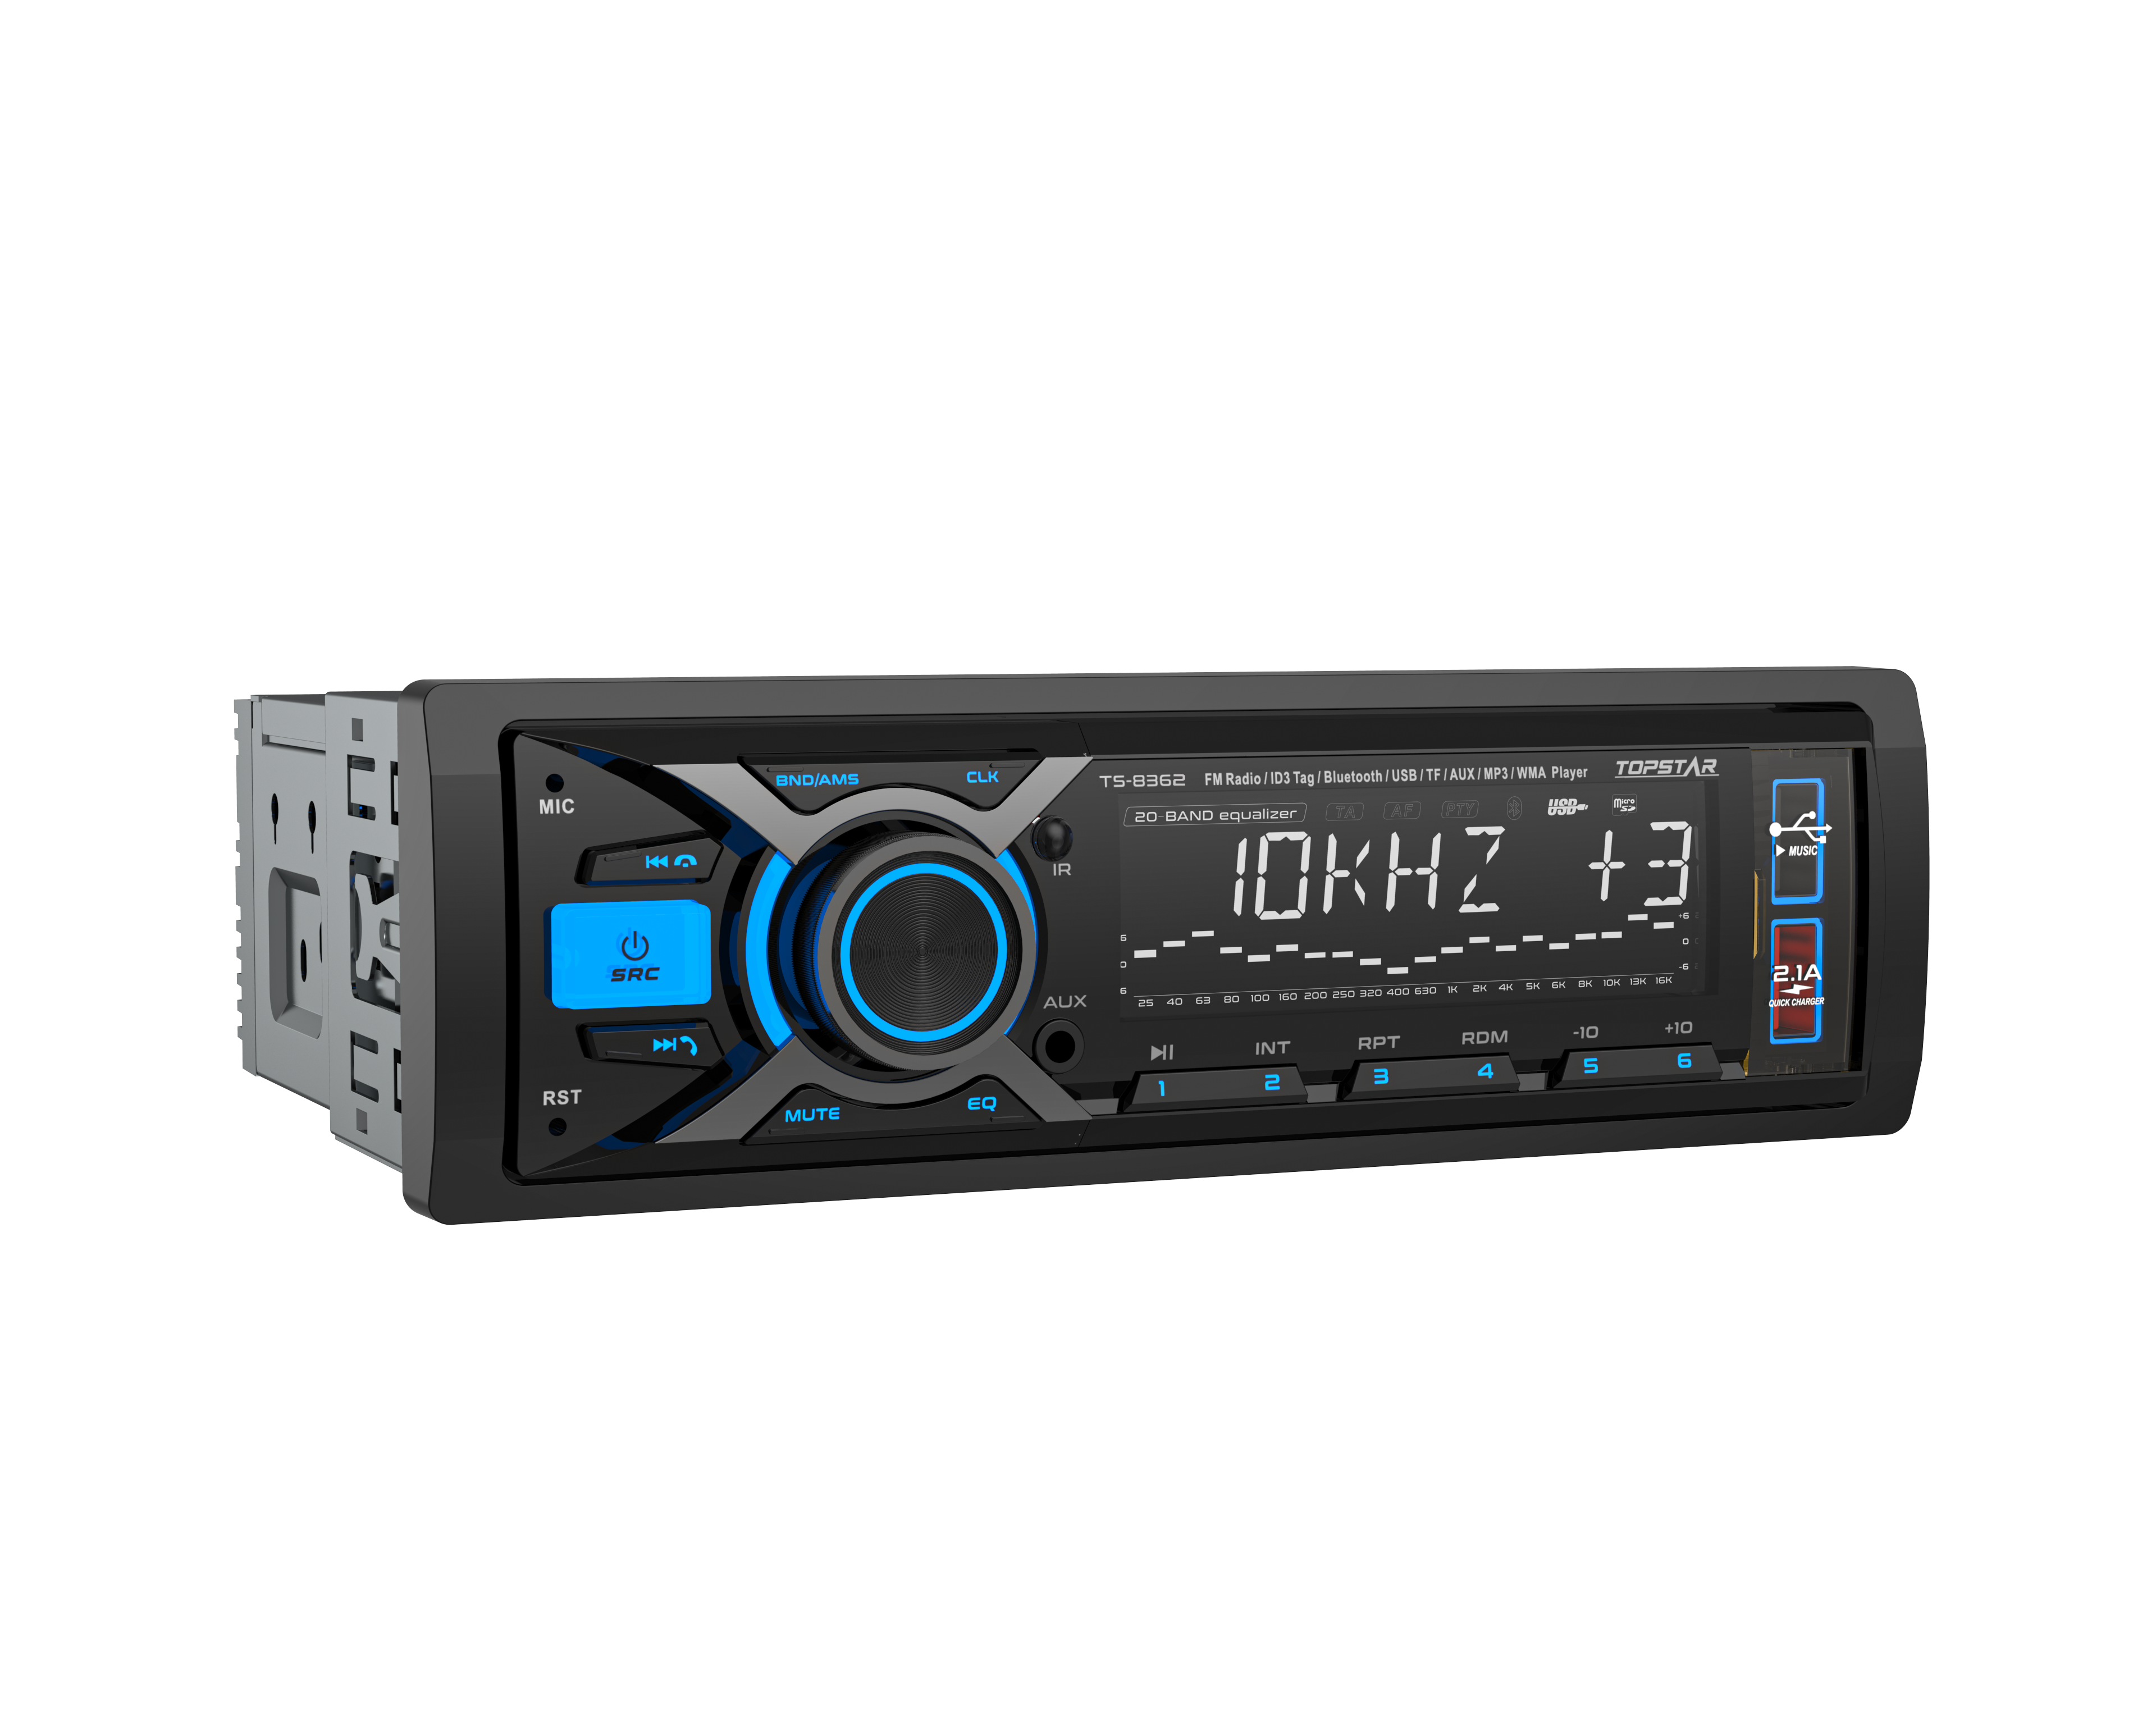  Car-Audio-MP3-Player mit Bluetooth-Funktion